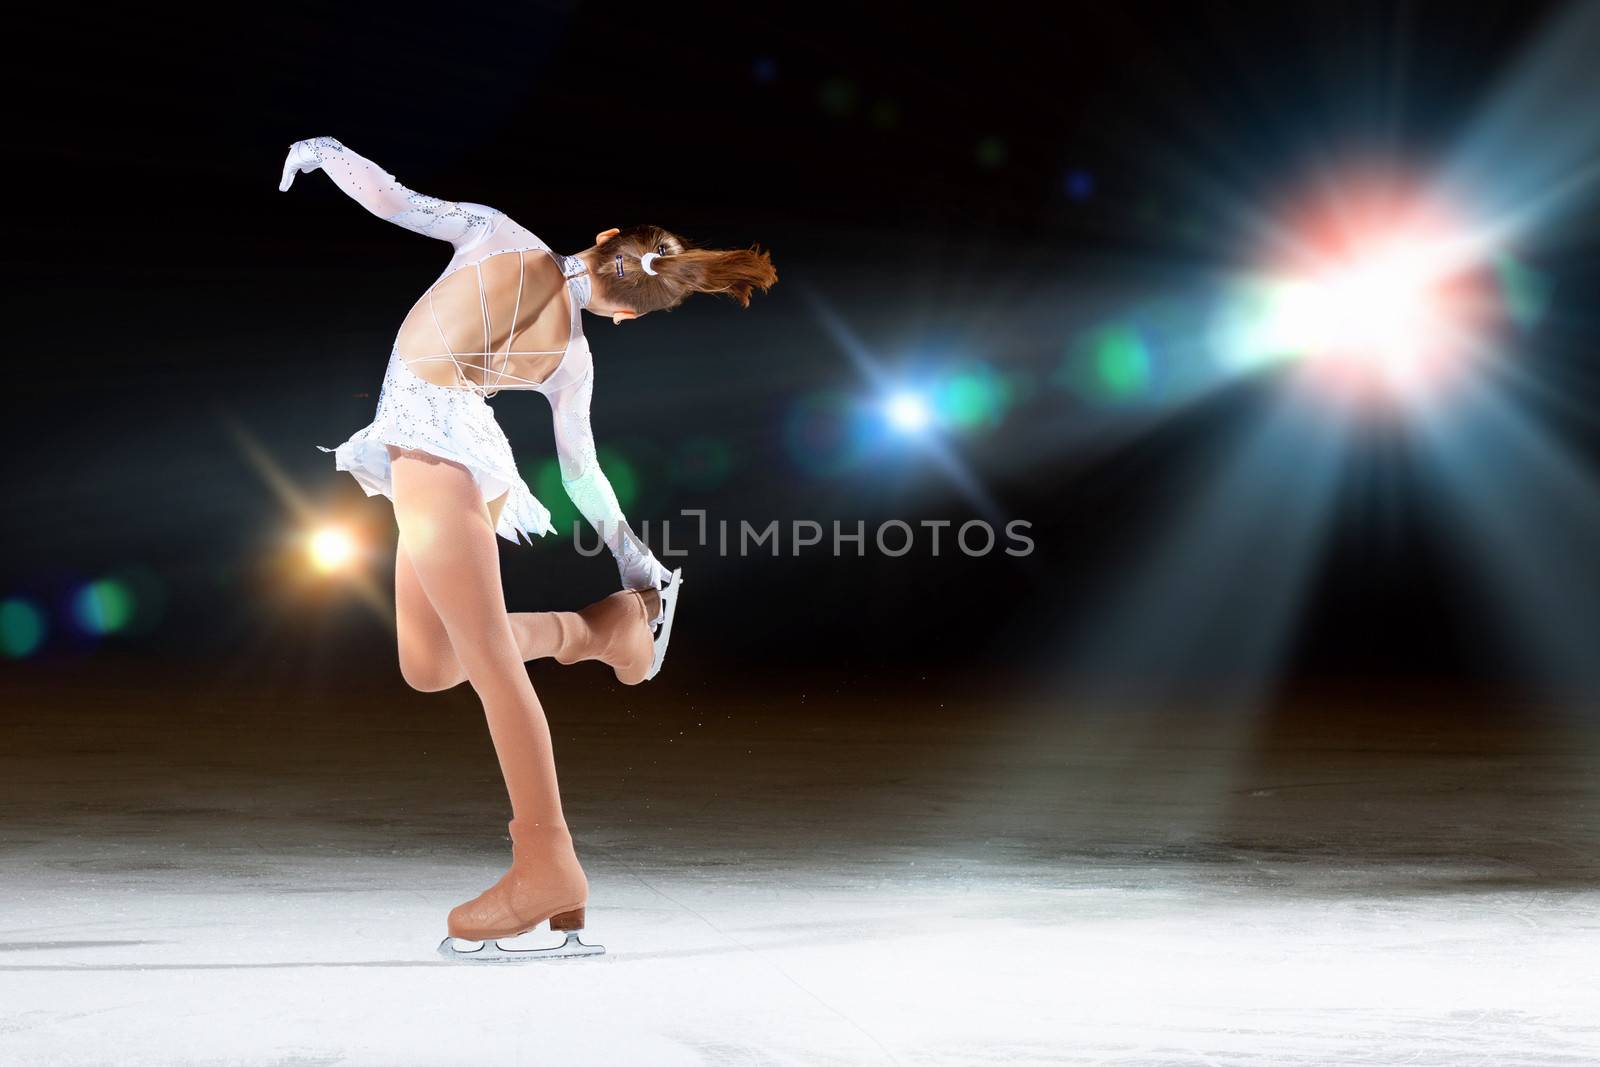 Little girl figure skating by sergey_nivens